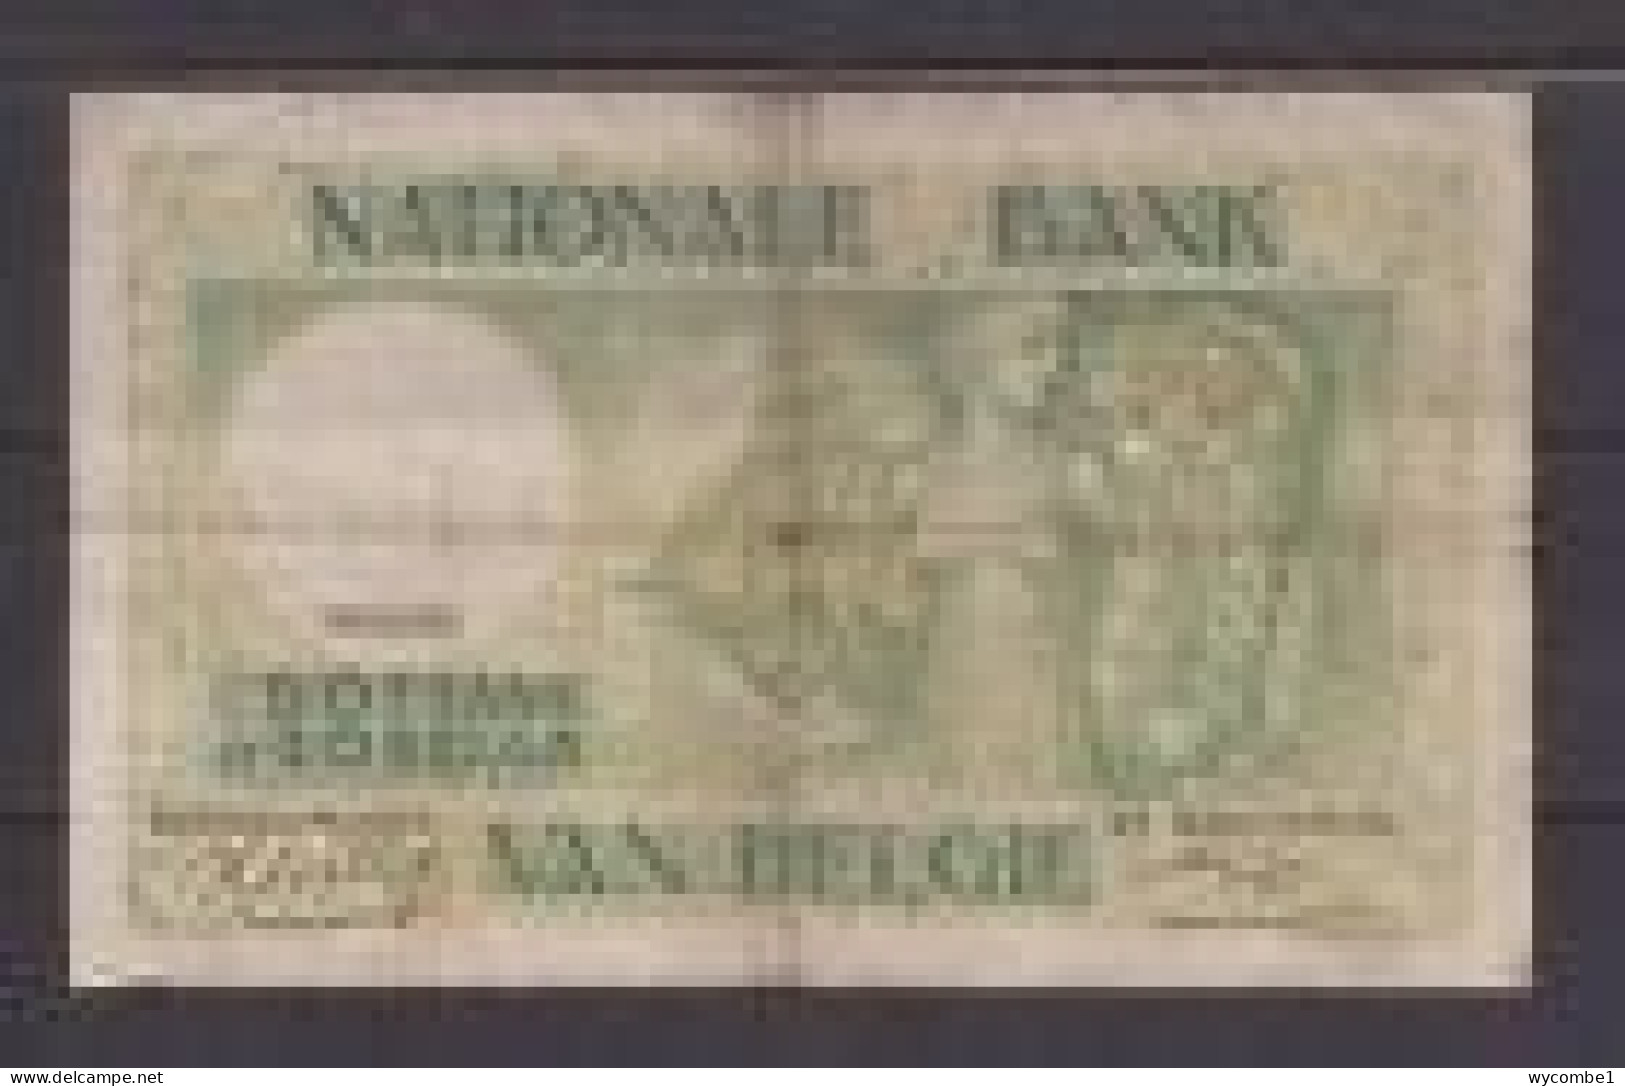 BELGIUM - 1942 50 Francs Circulated Banknote As Scans - 50 Franchi-10 Belgas